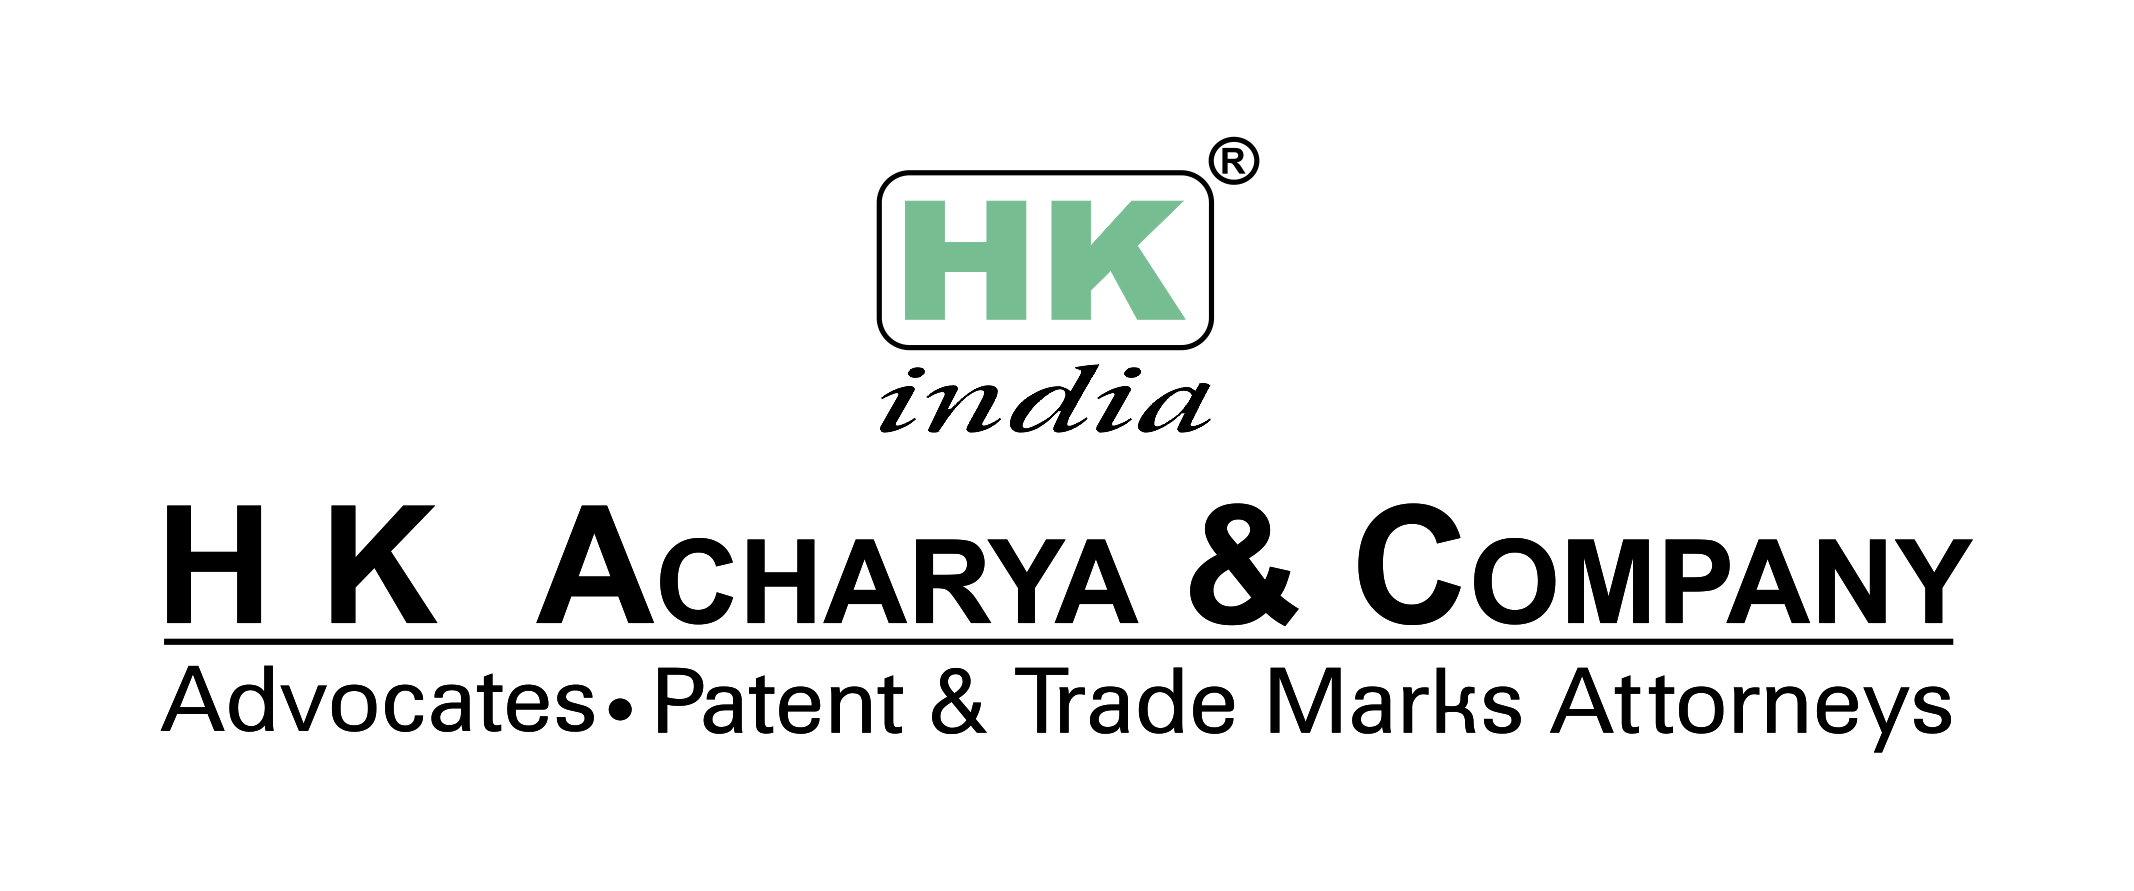 H K Acharya & Company